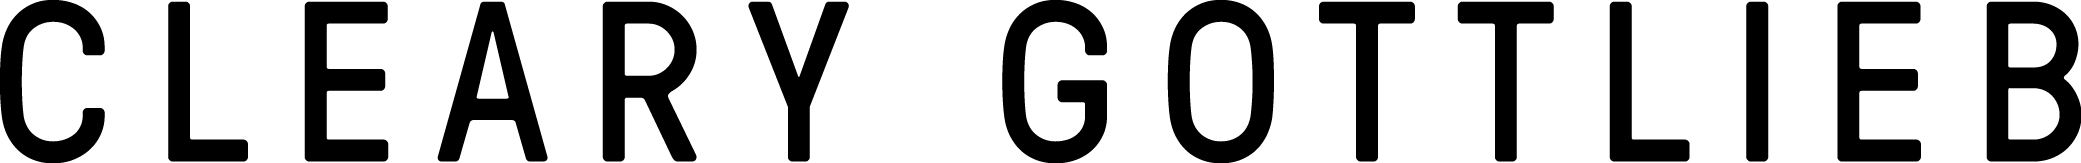 Cleary-Gottlieb-Black-logo 1